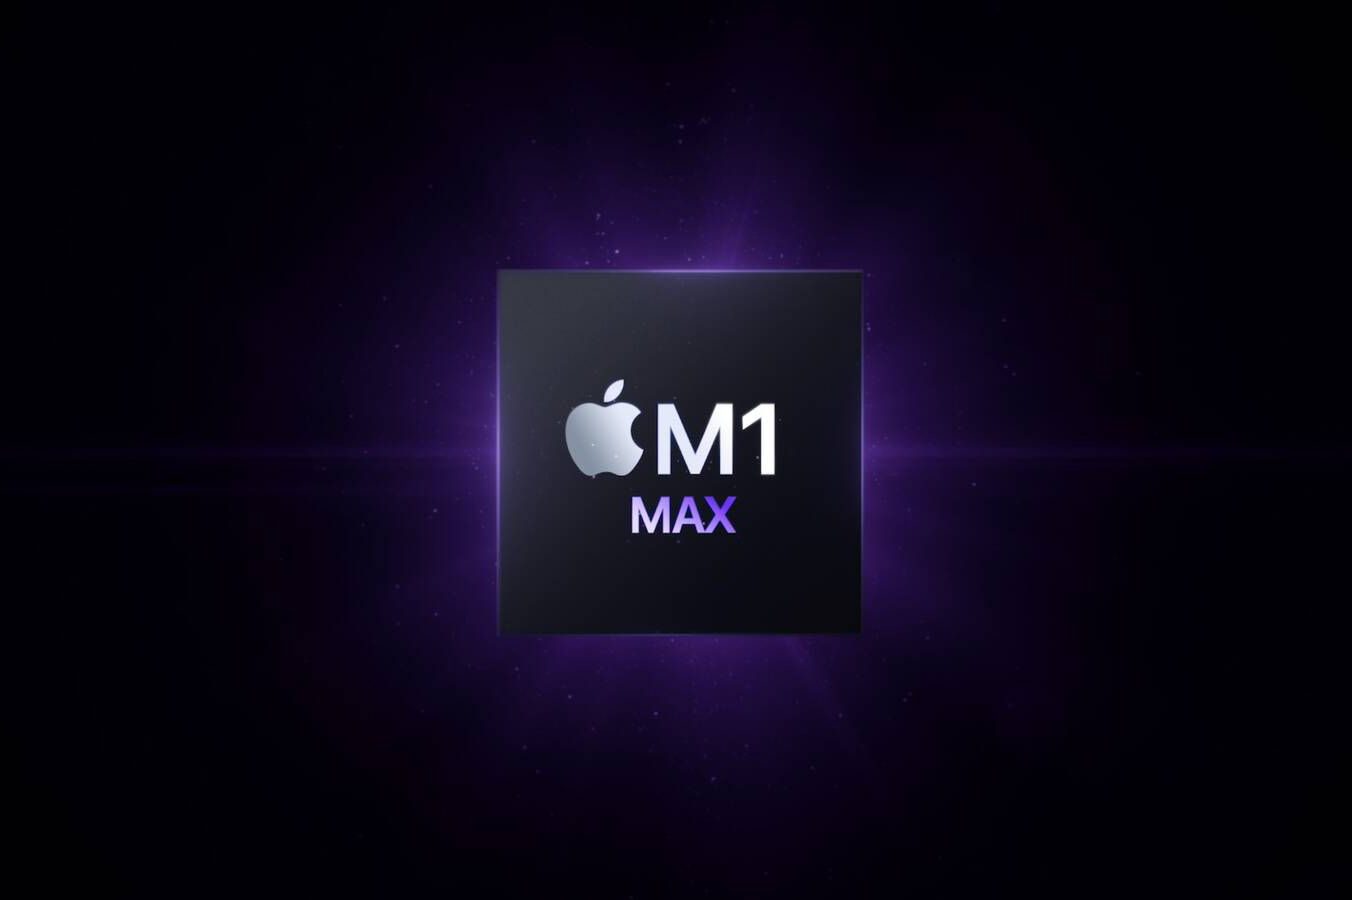 蘋果 M1 Max 晶片 GPU 繪圖處理效能超過 PlayStation 5